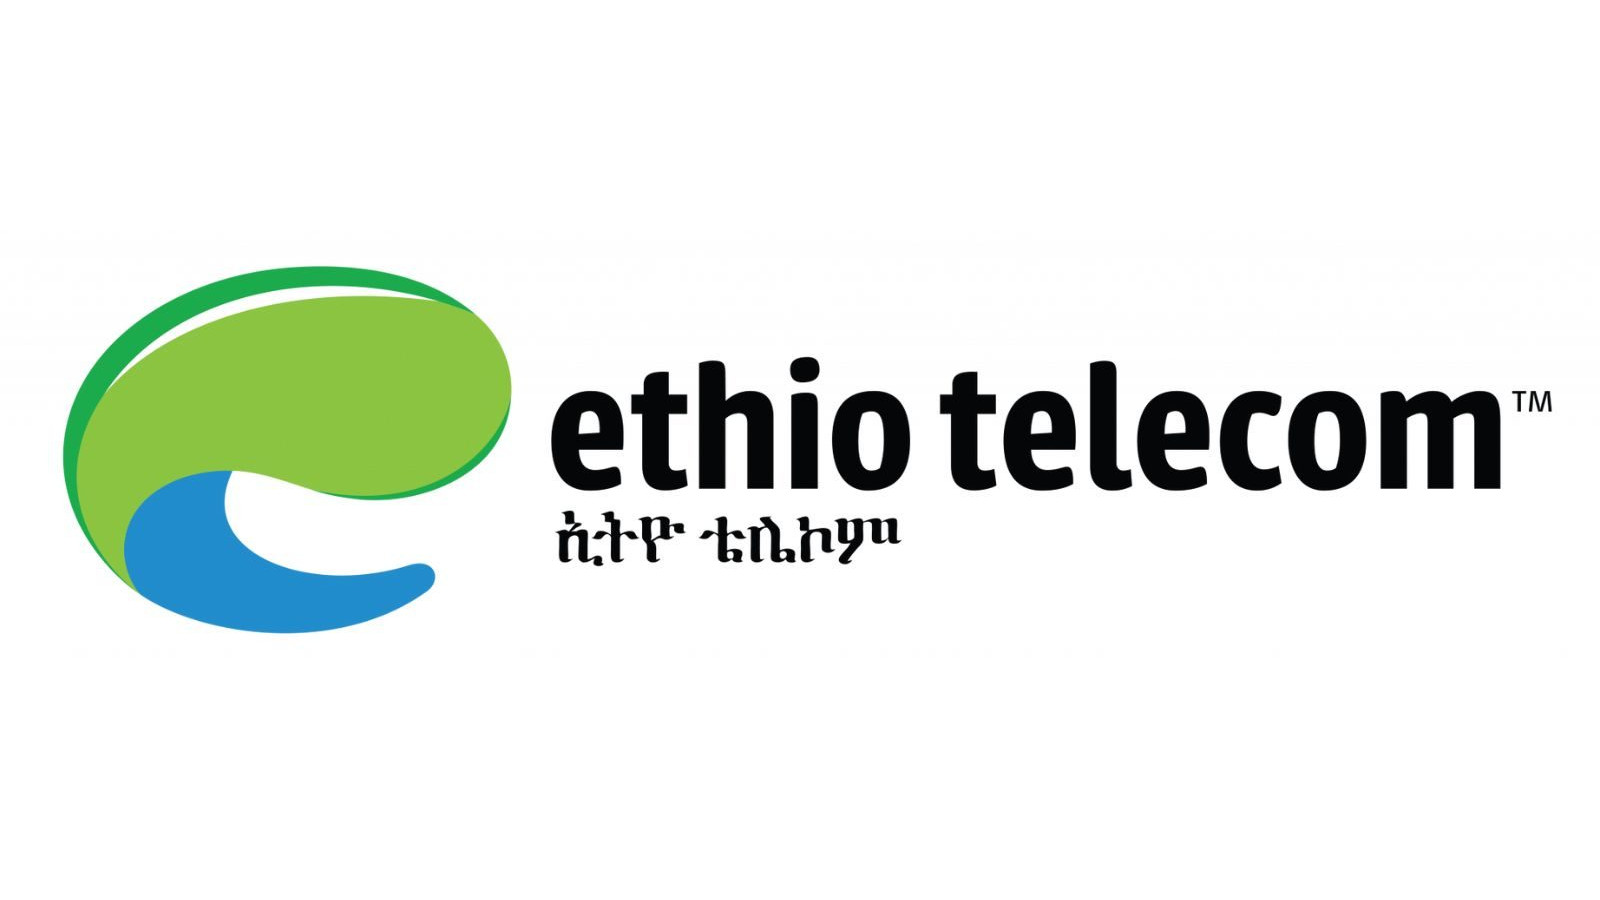 Ethiotelecom 7 ETB Mobile Top-up ET (0.71$)